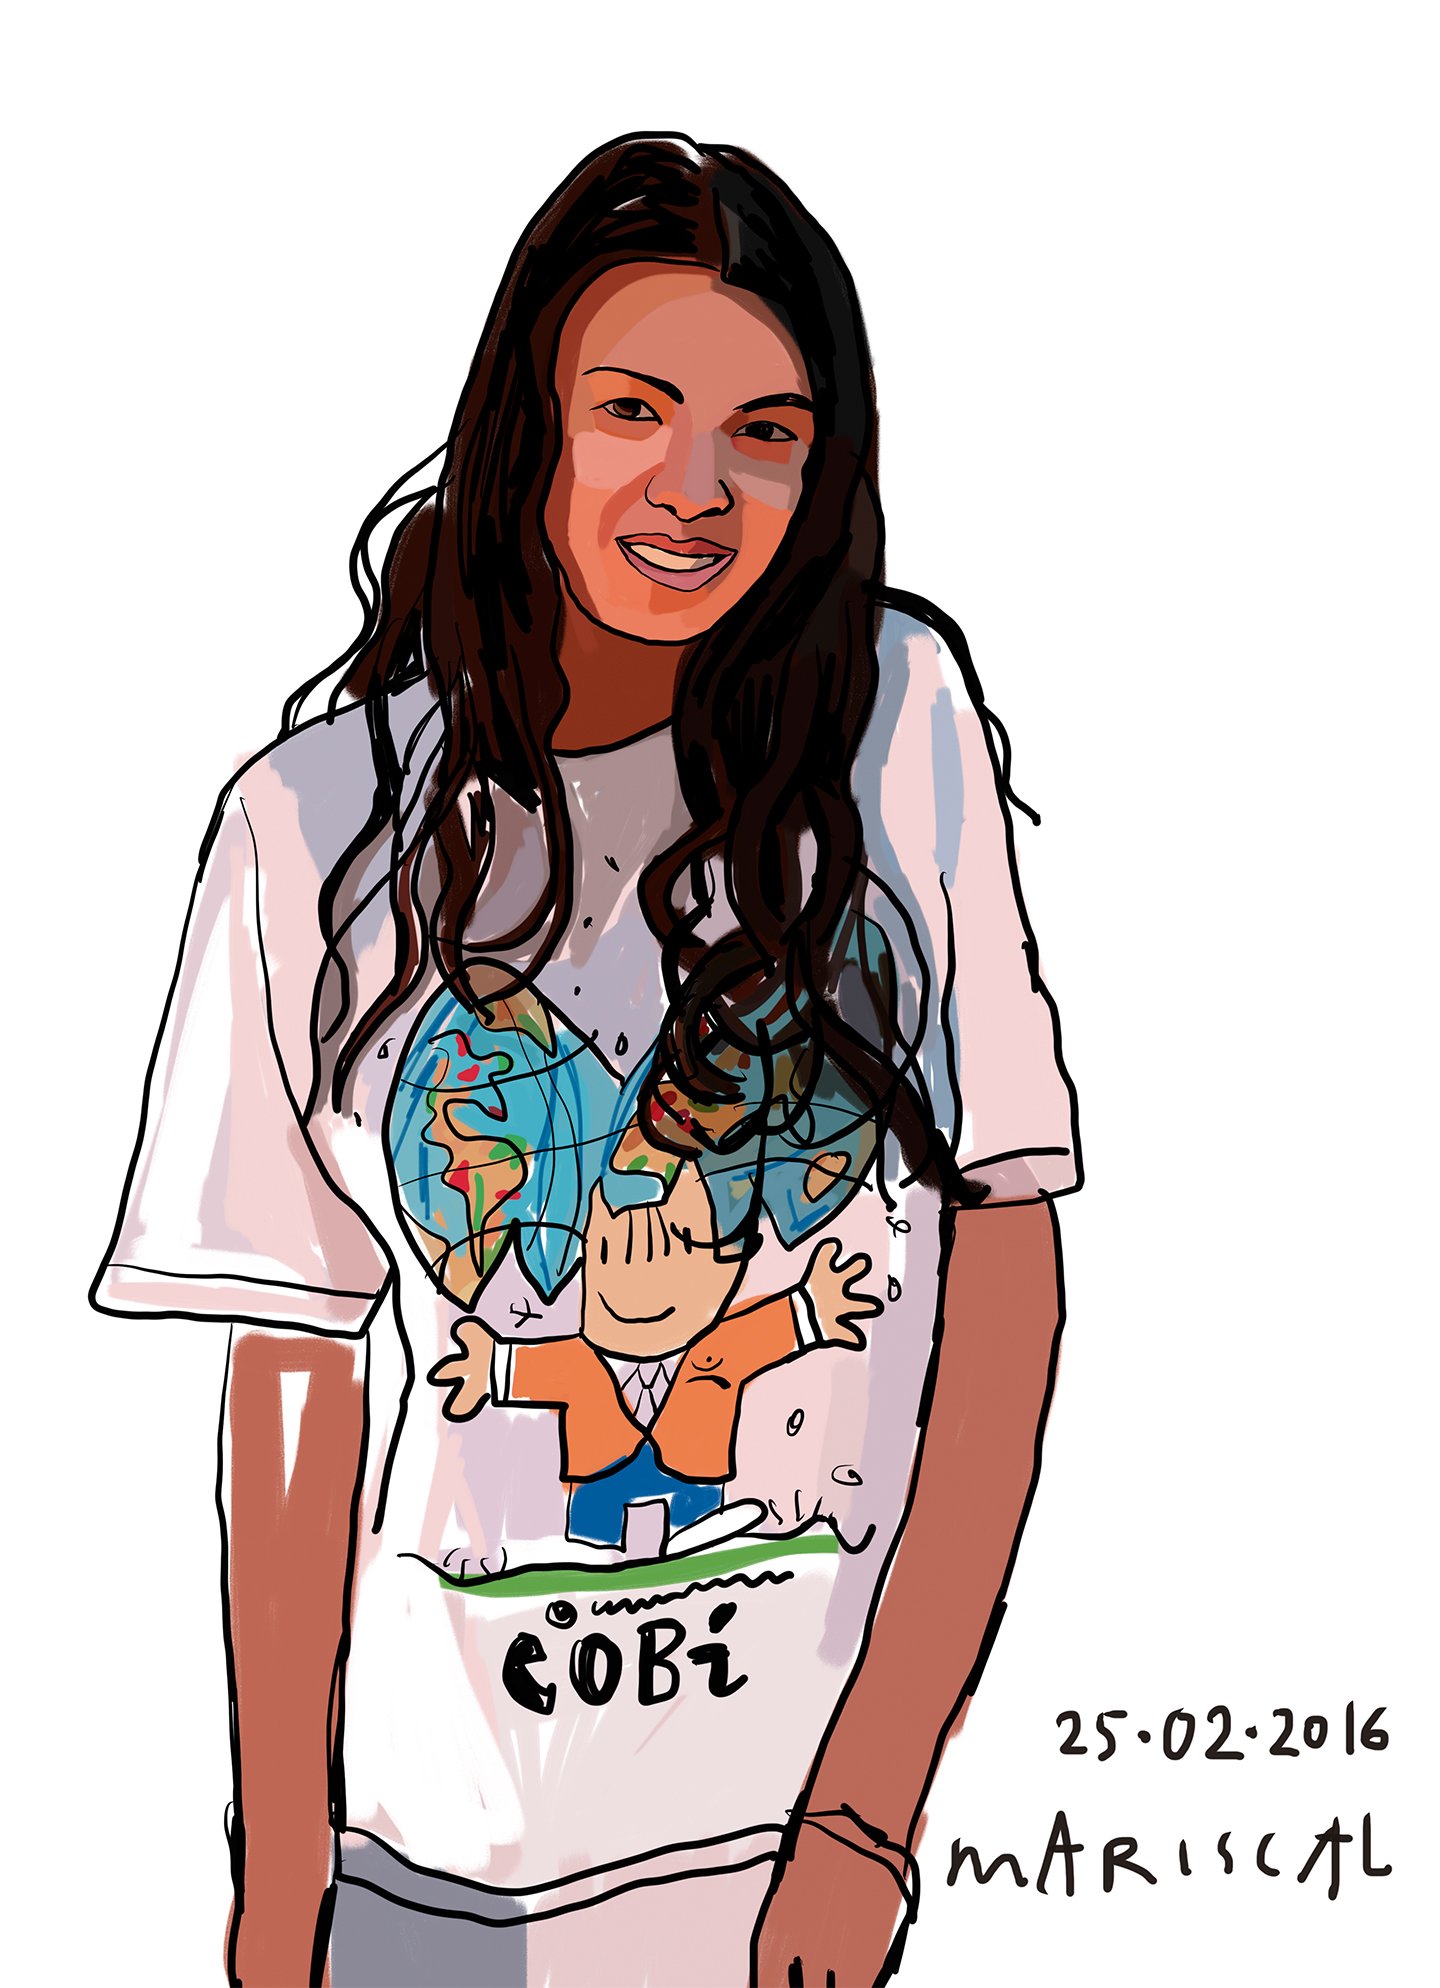 Mariscal Portraits de una chica con la camiseta de Cobi, autor Javier Mariscal